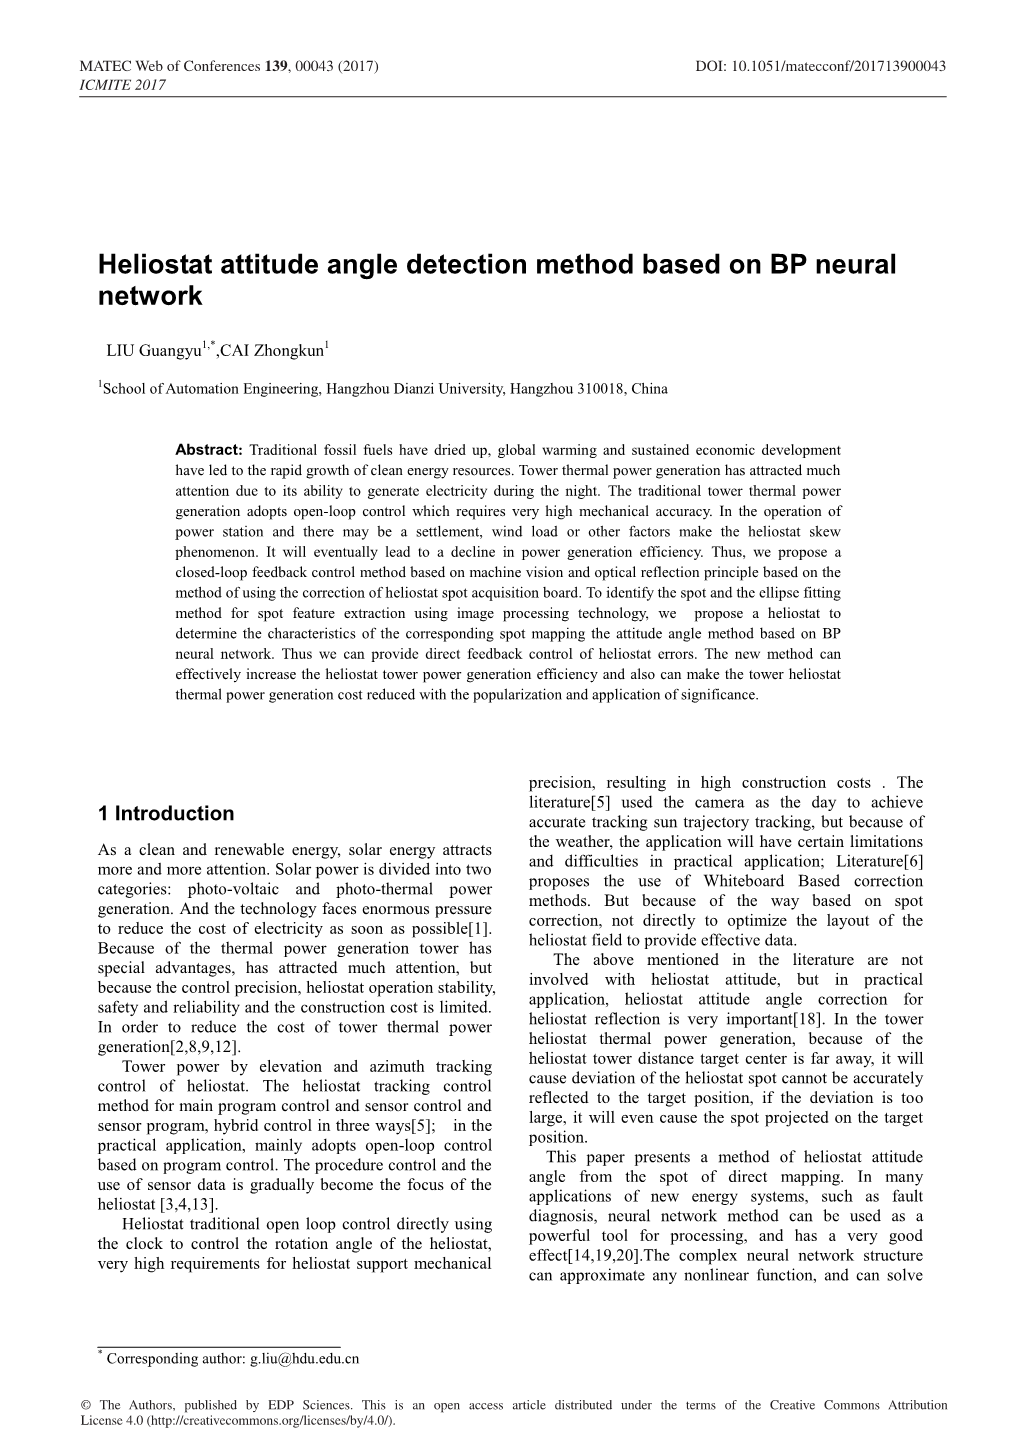 Heliostat Attitude Angle Detection Method Based on BP Neural Network